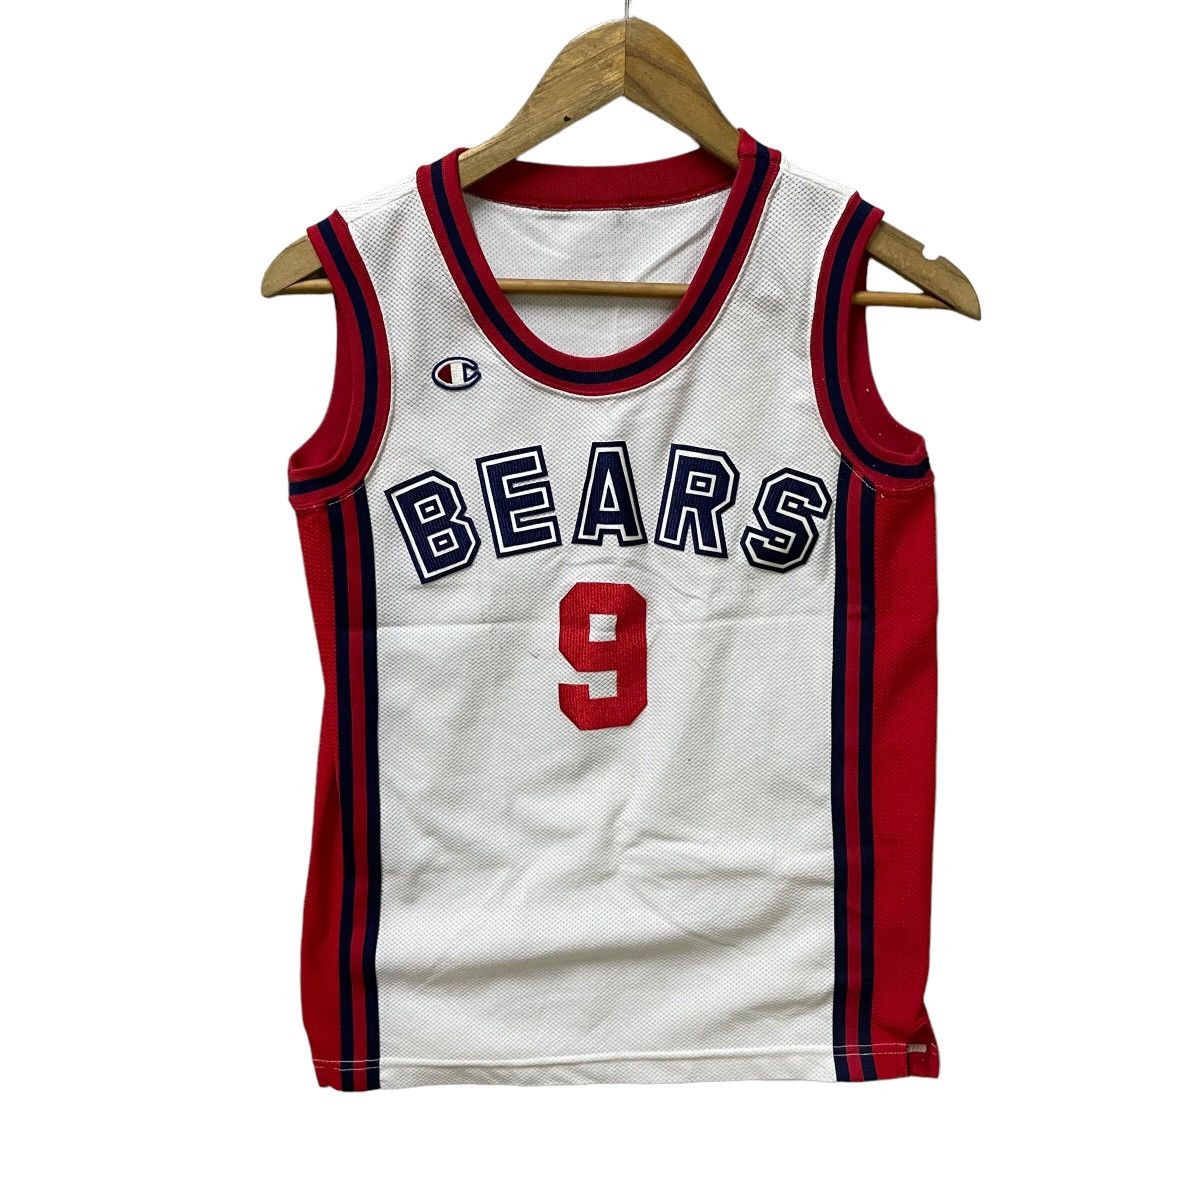 Vintage bears champion jersey - 1